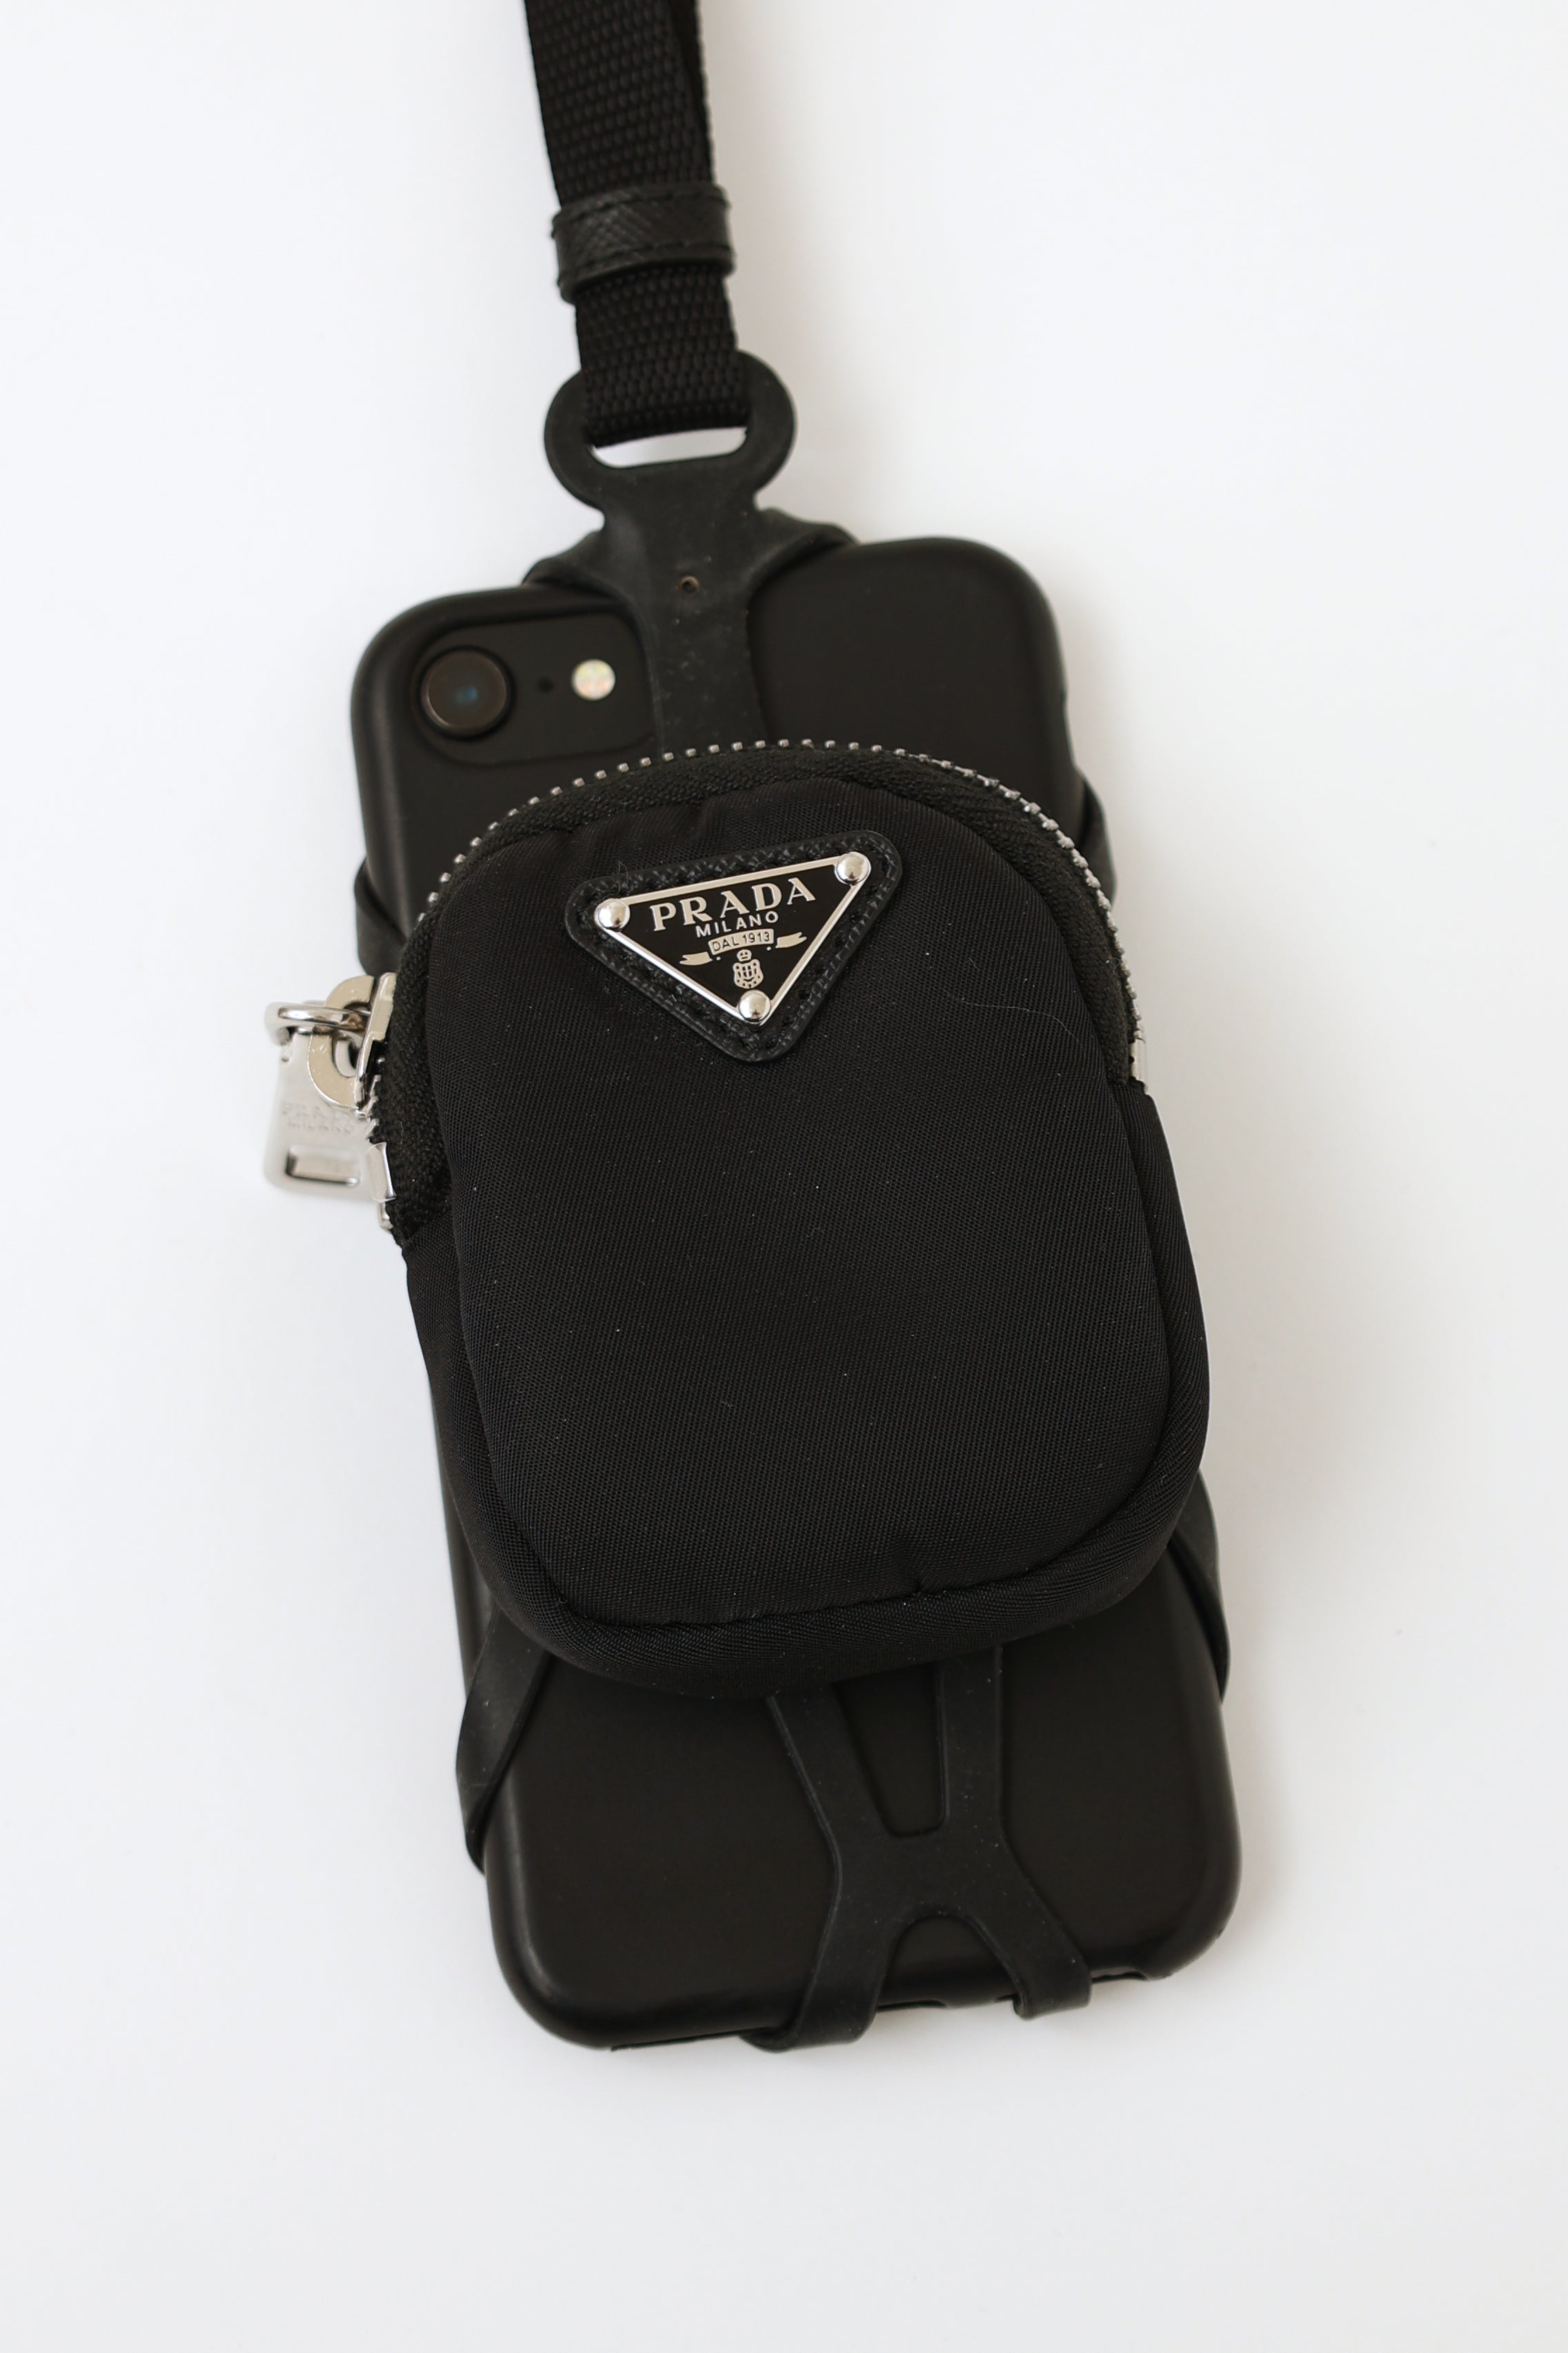 Prada Re-Nylon Smartphone Case - Black